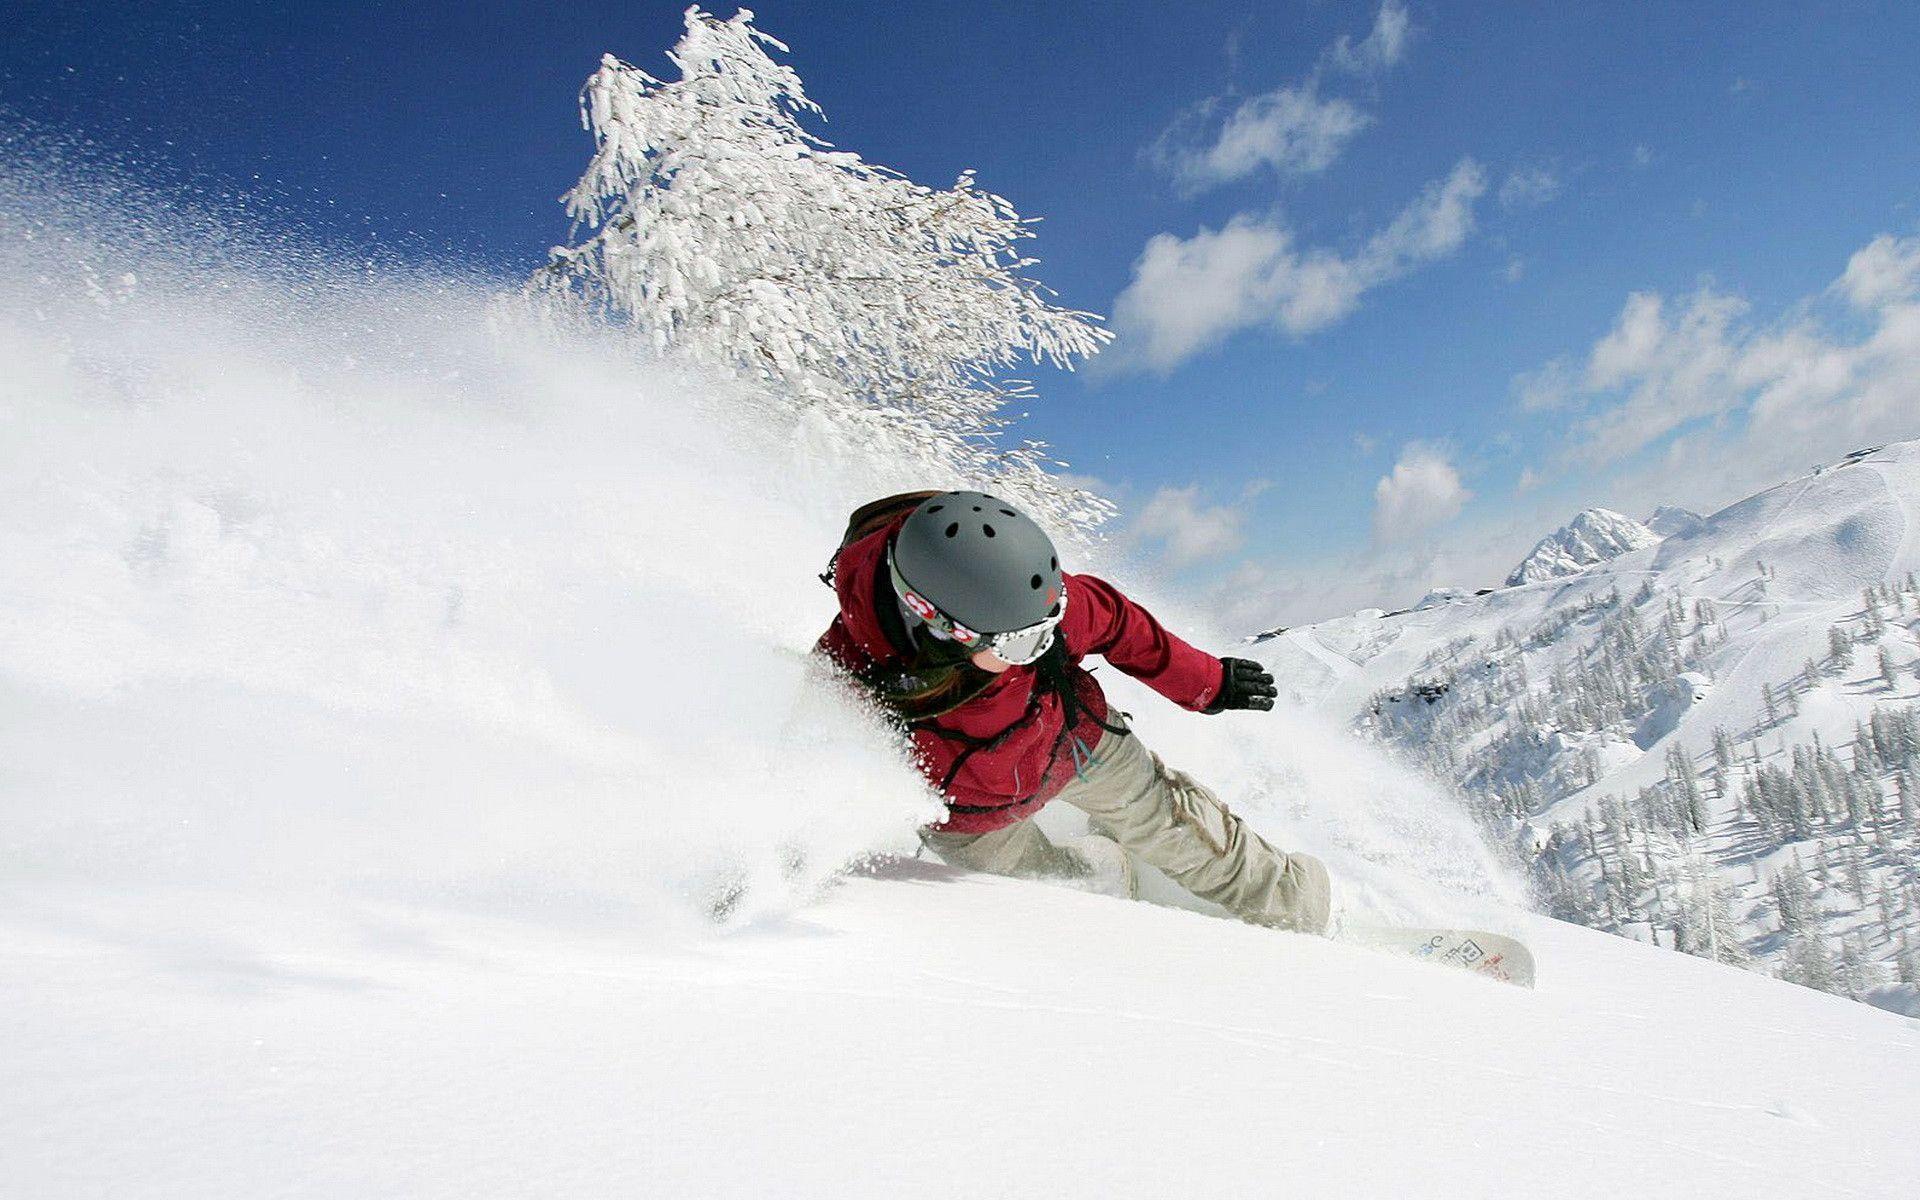 Wallpaper For > HD Snowboarding Wallpaper iPhone